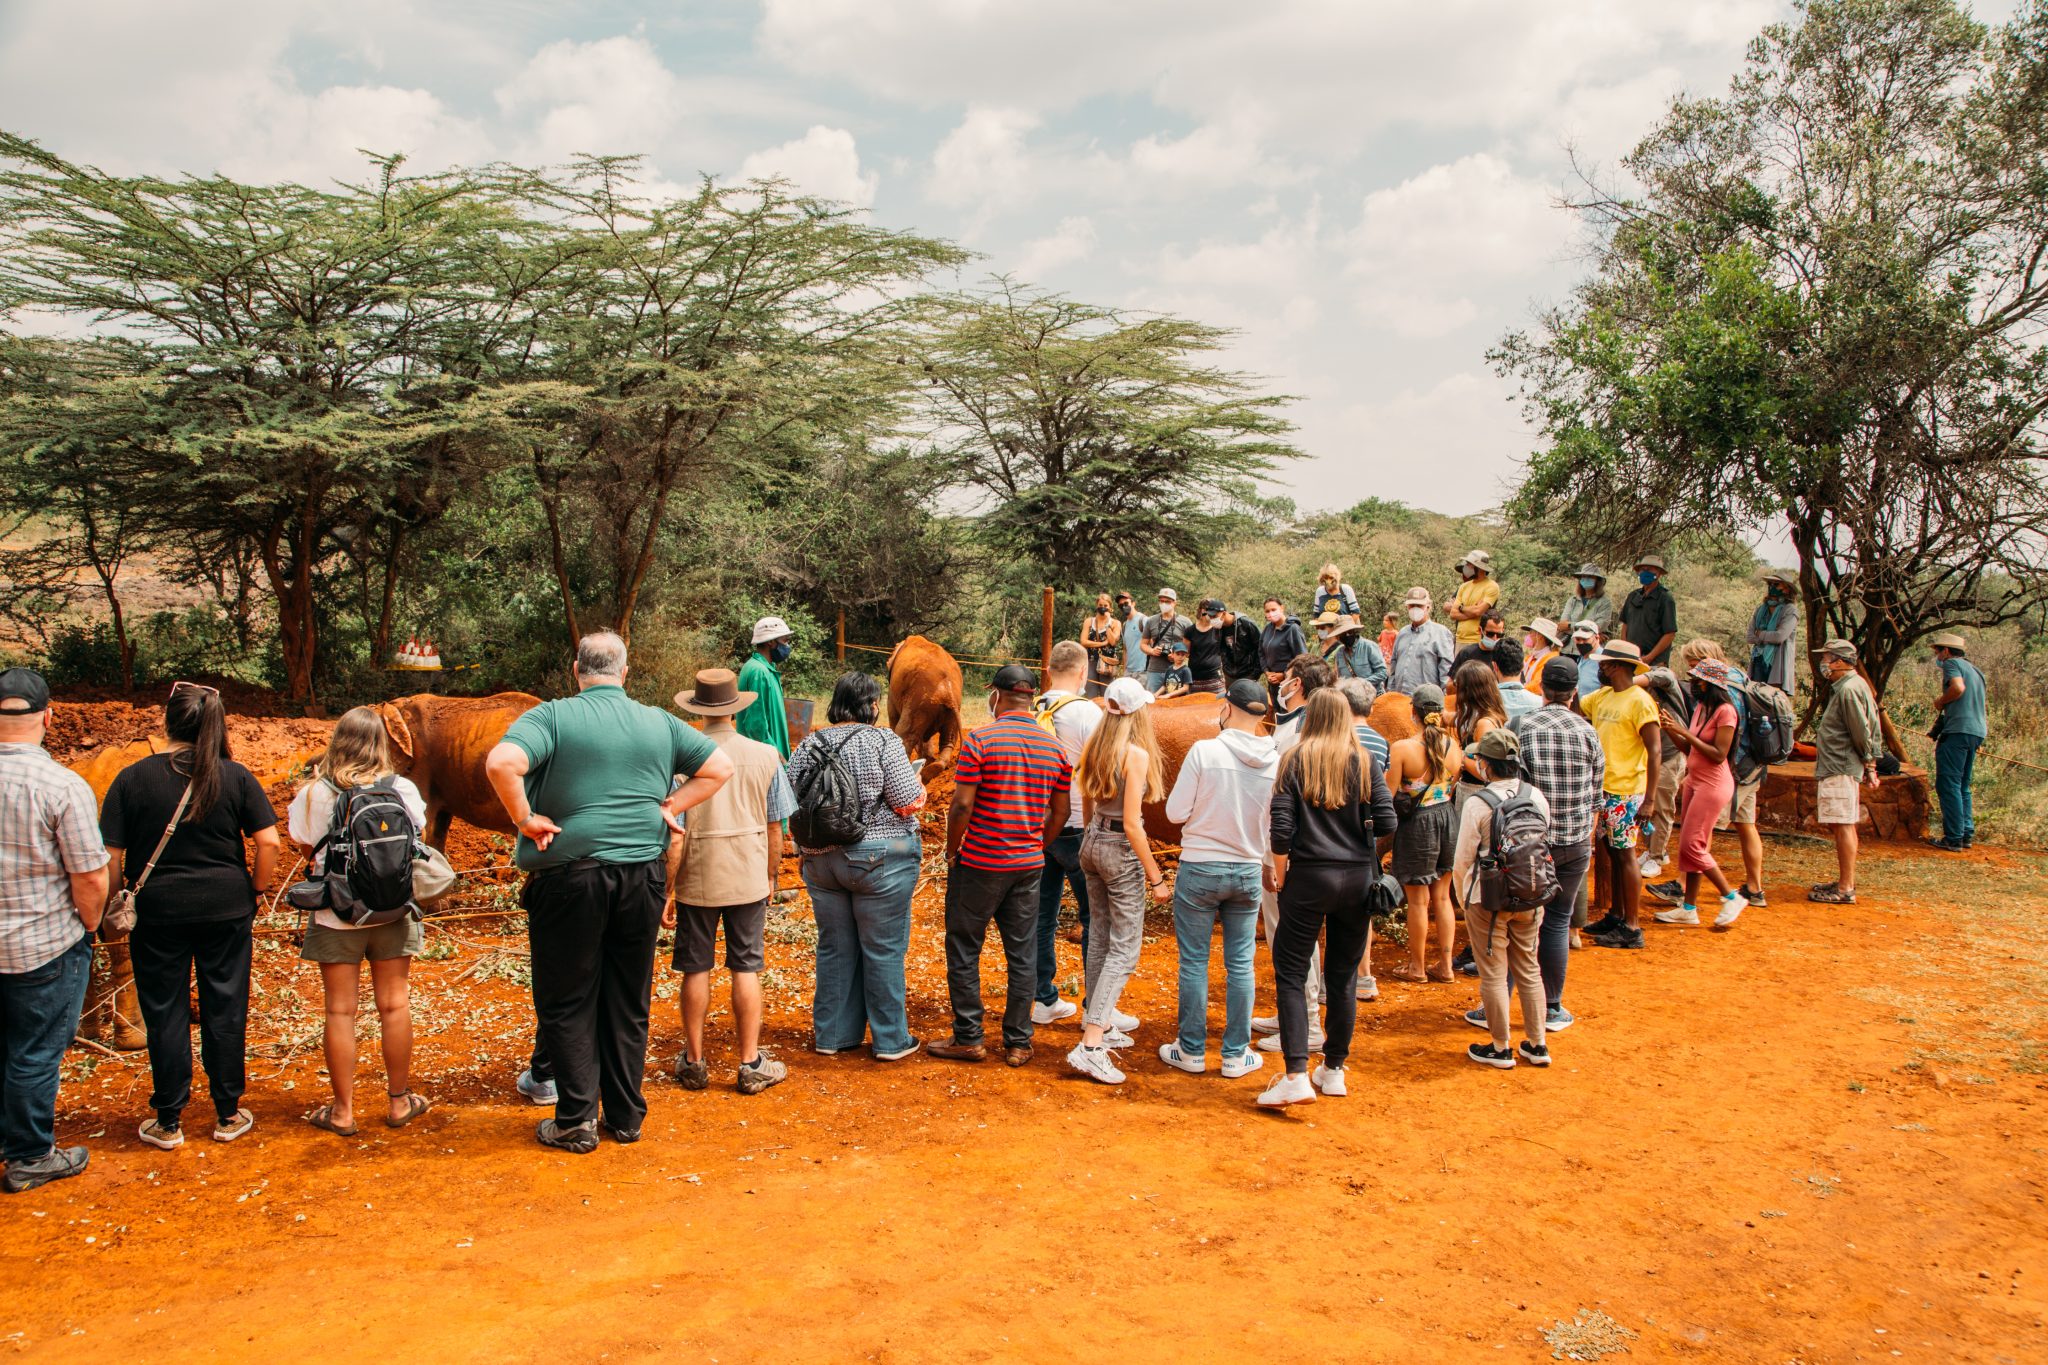 The public Feeding time at Sheldrick Wildlife trust elephant orphanage in Nairobi Kenya